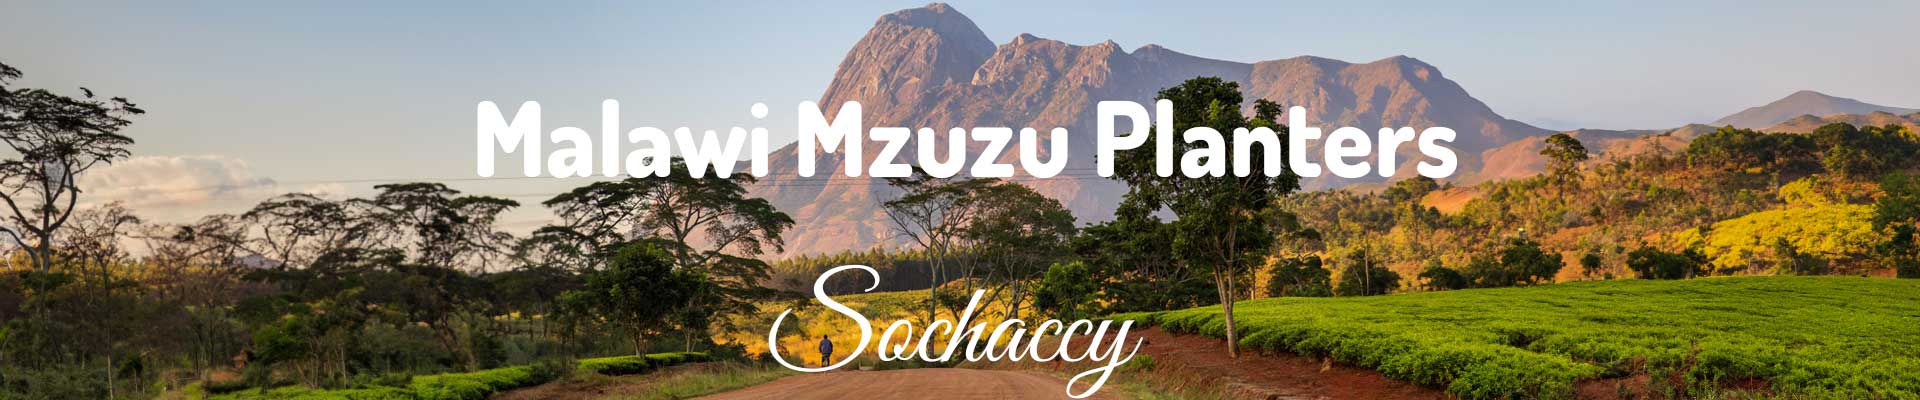 Kawa Malawi Mzuzu Planters